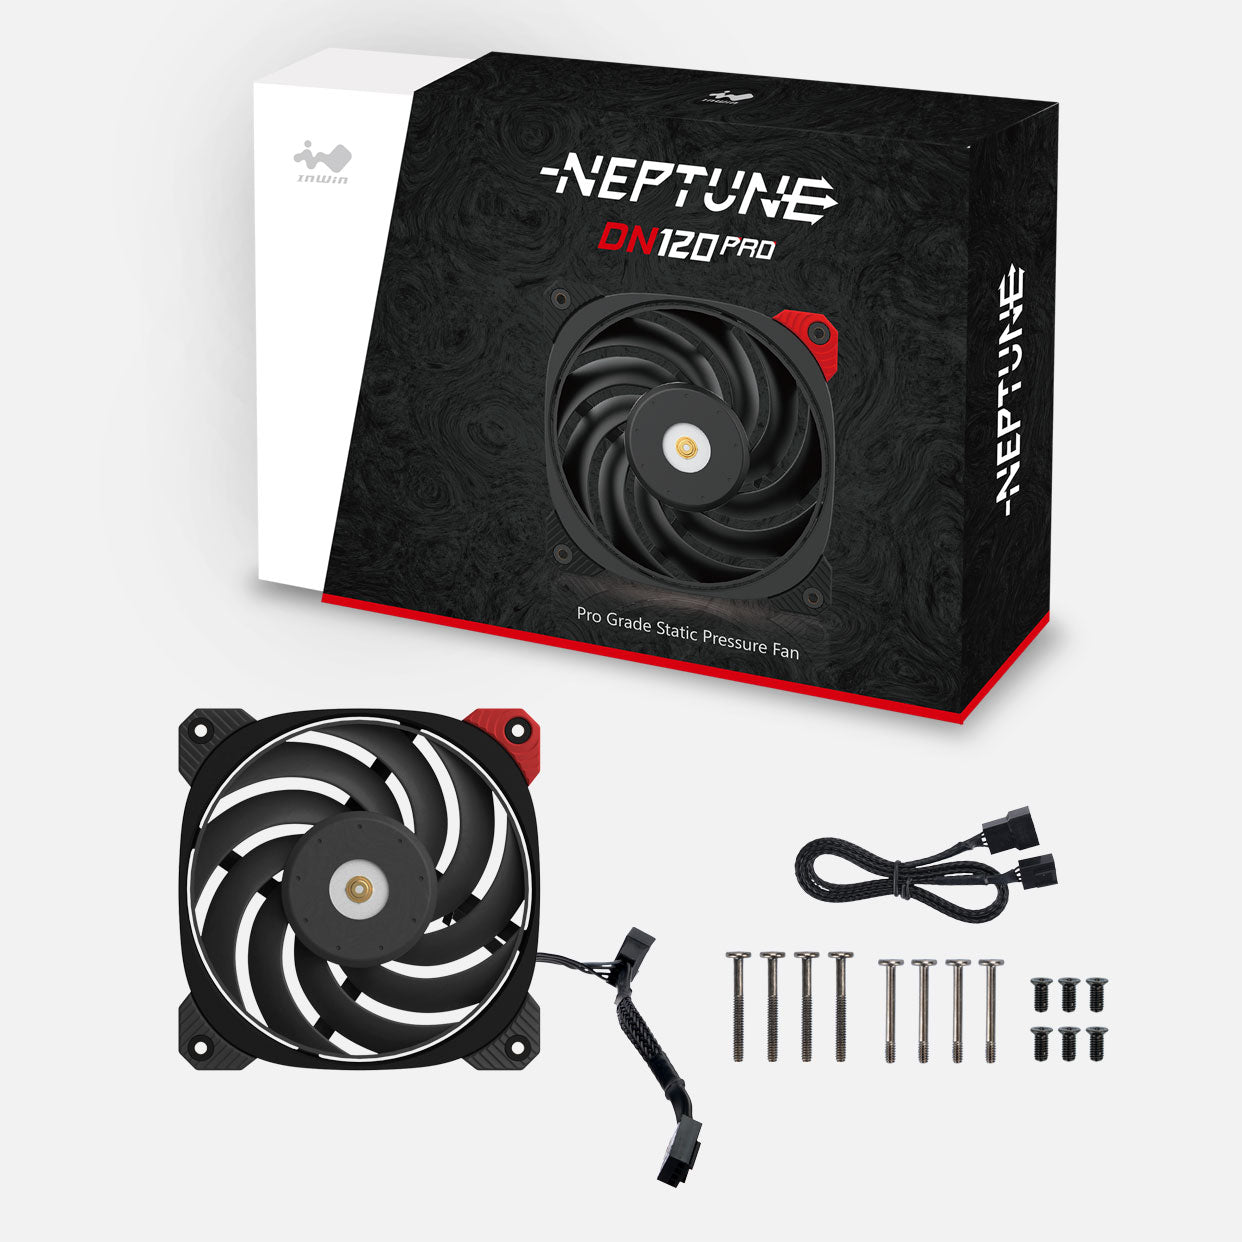 Neptune Professional Grade Turbine Blade 120mm - Single Pack